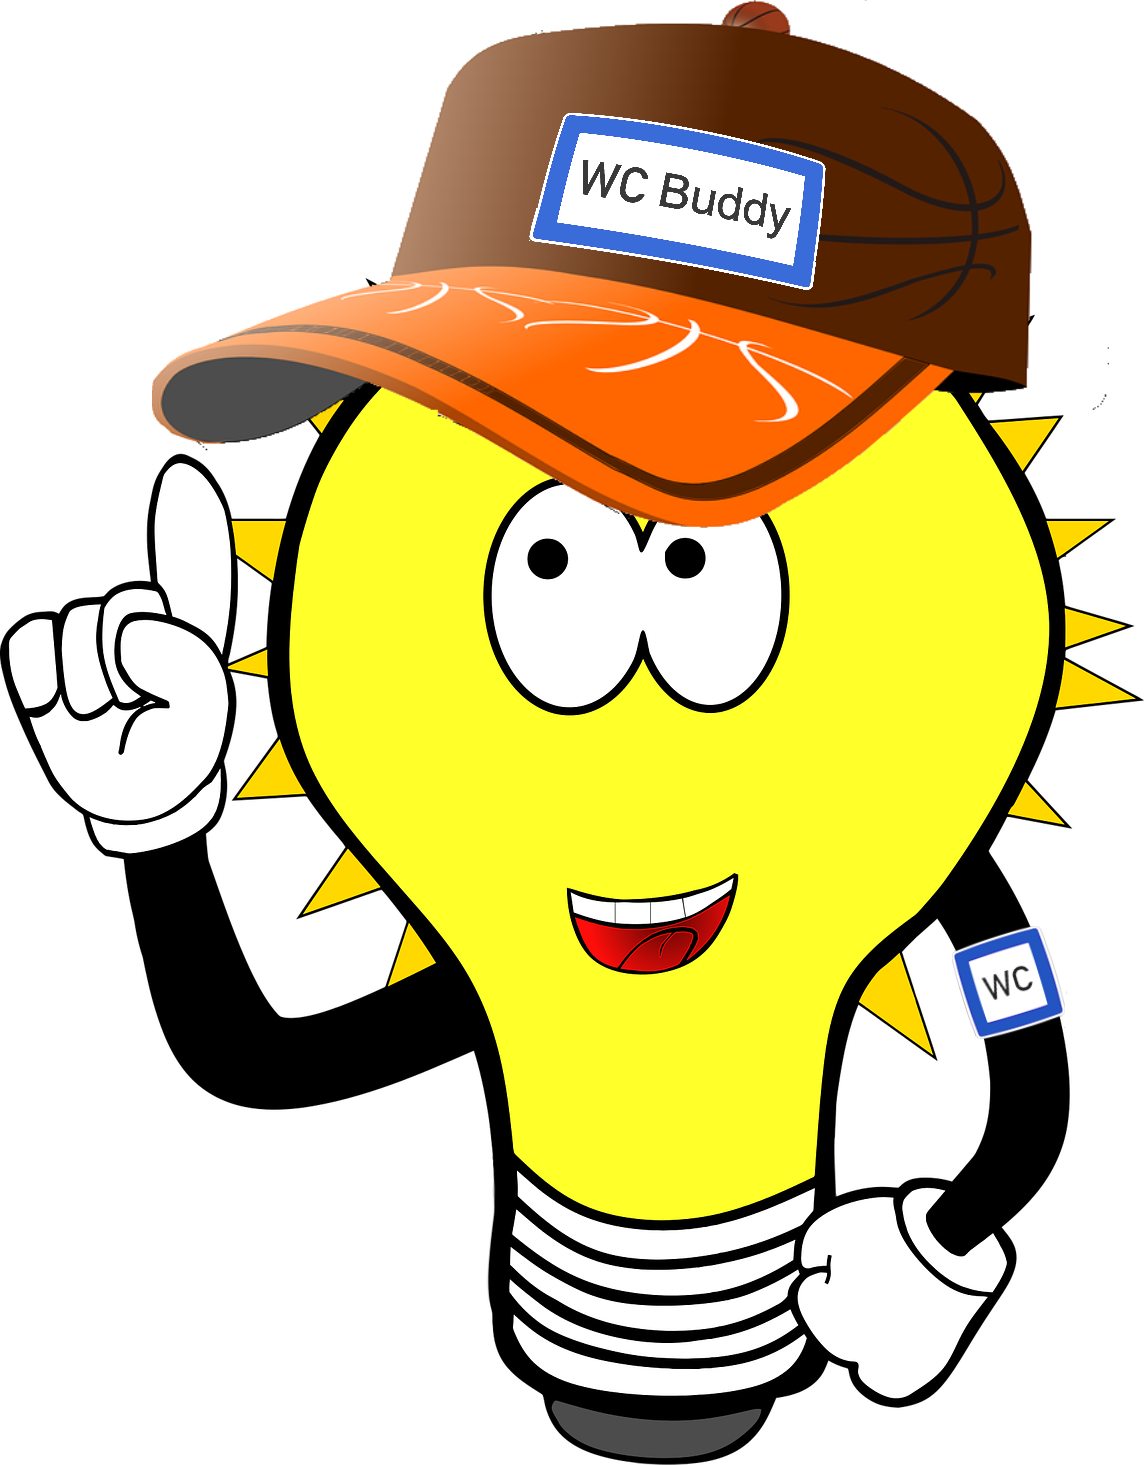 WCBuddy logo